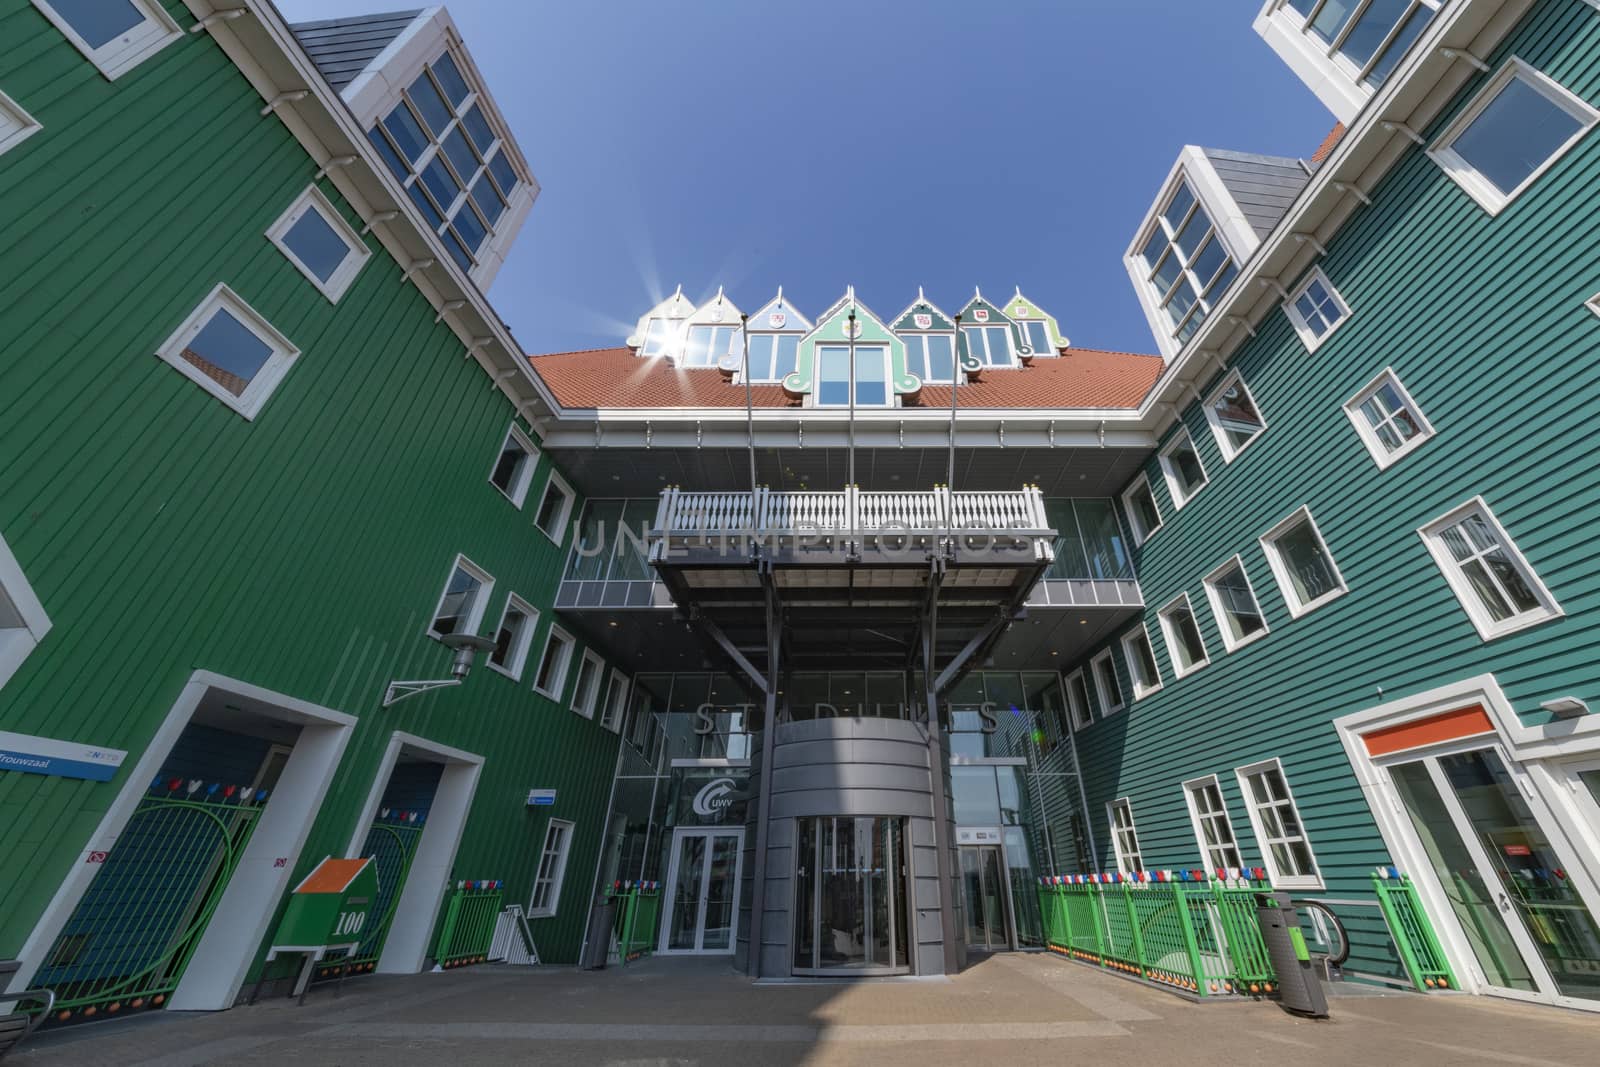 ZAANDAM, 14 April 2019 - Front view of the green entrance and bulding of Zaandam city hall  by ankorlight